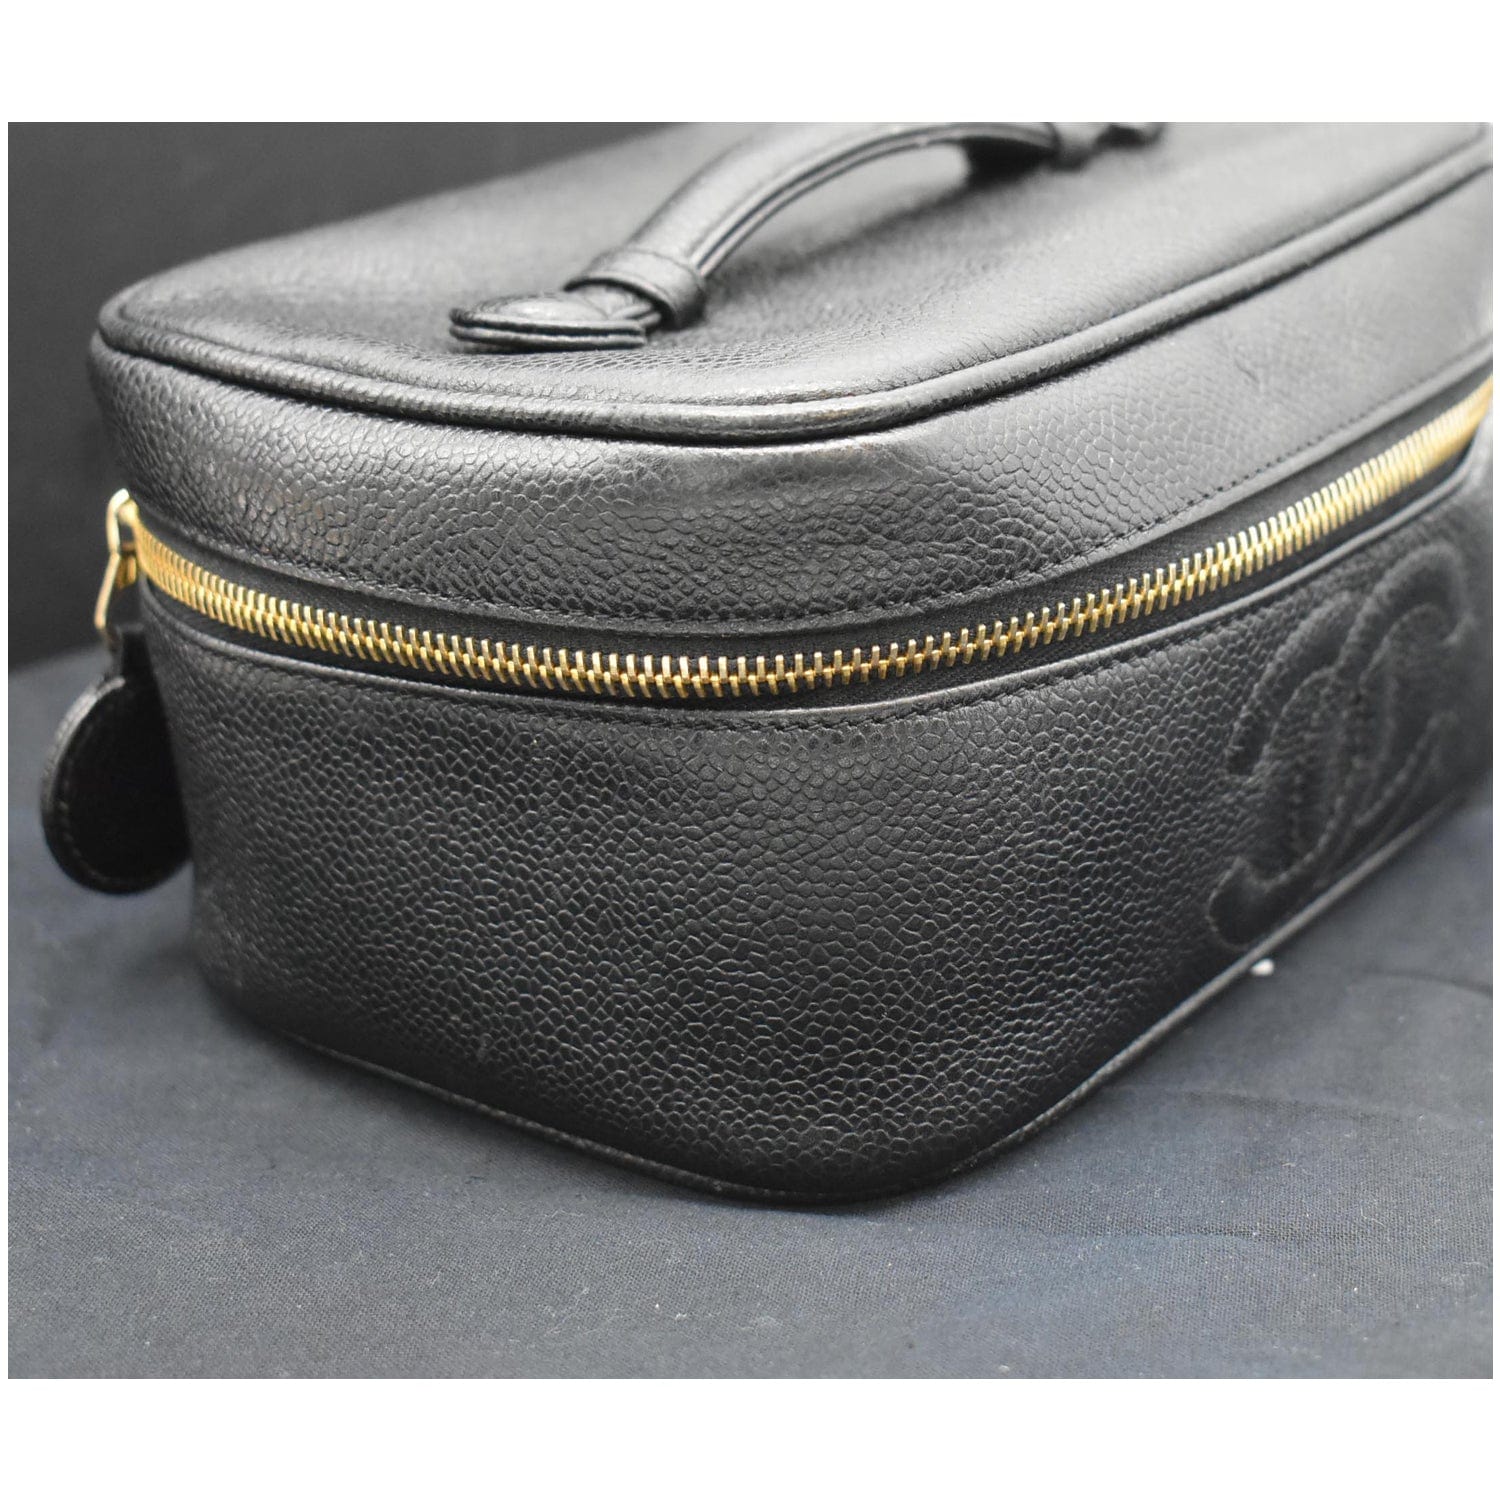 Chanel vintage vanity bag 🖤This item is a store limited item. DM